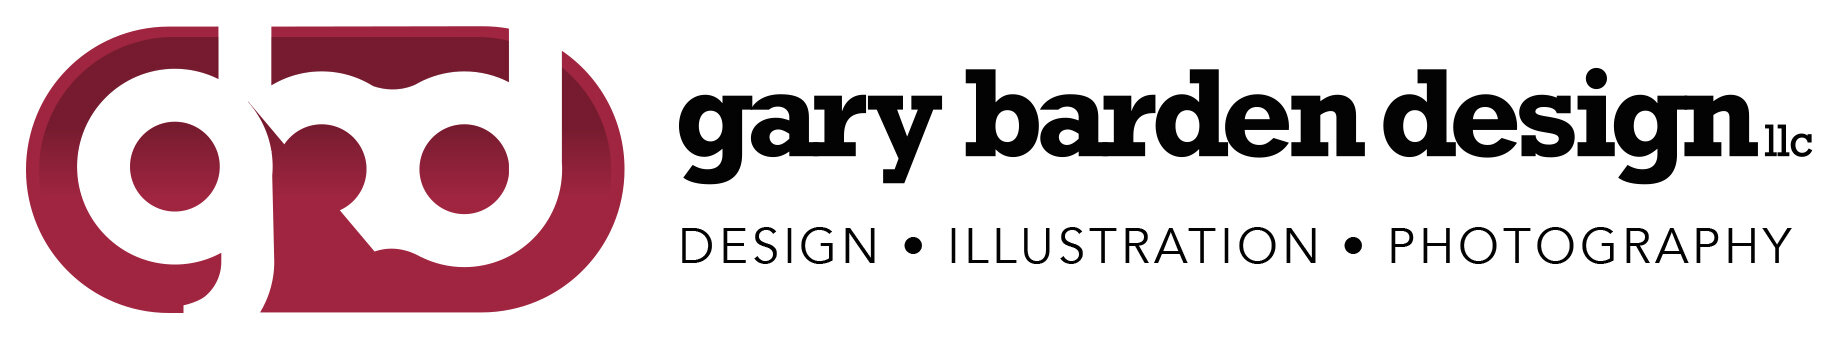 Gary Barden Design_horizontalDIP.jpg